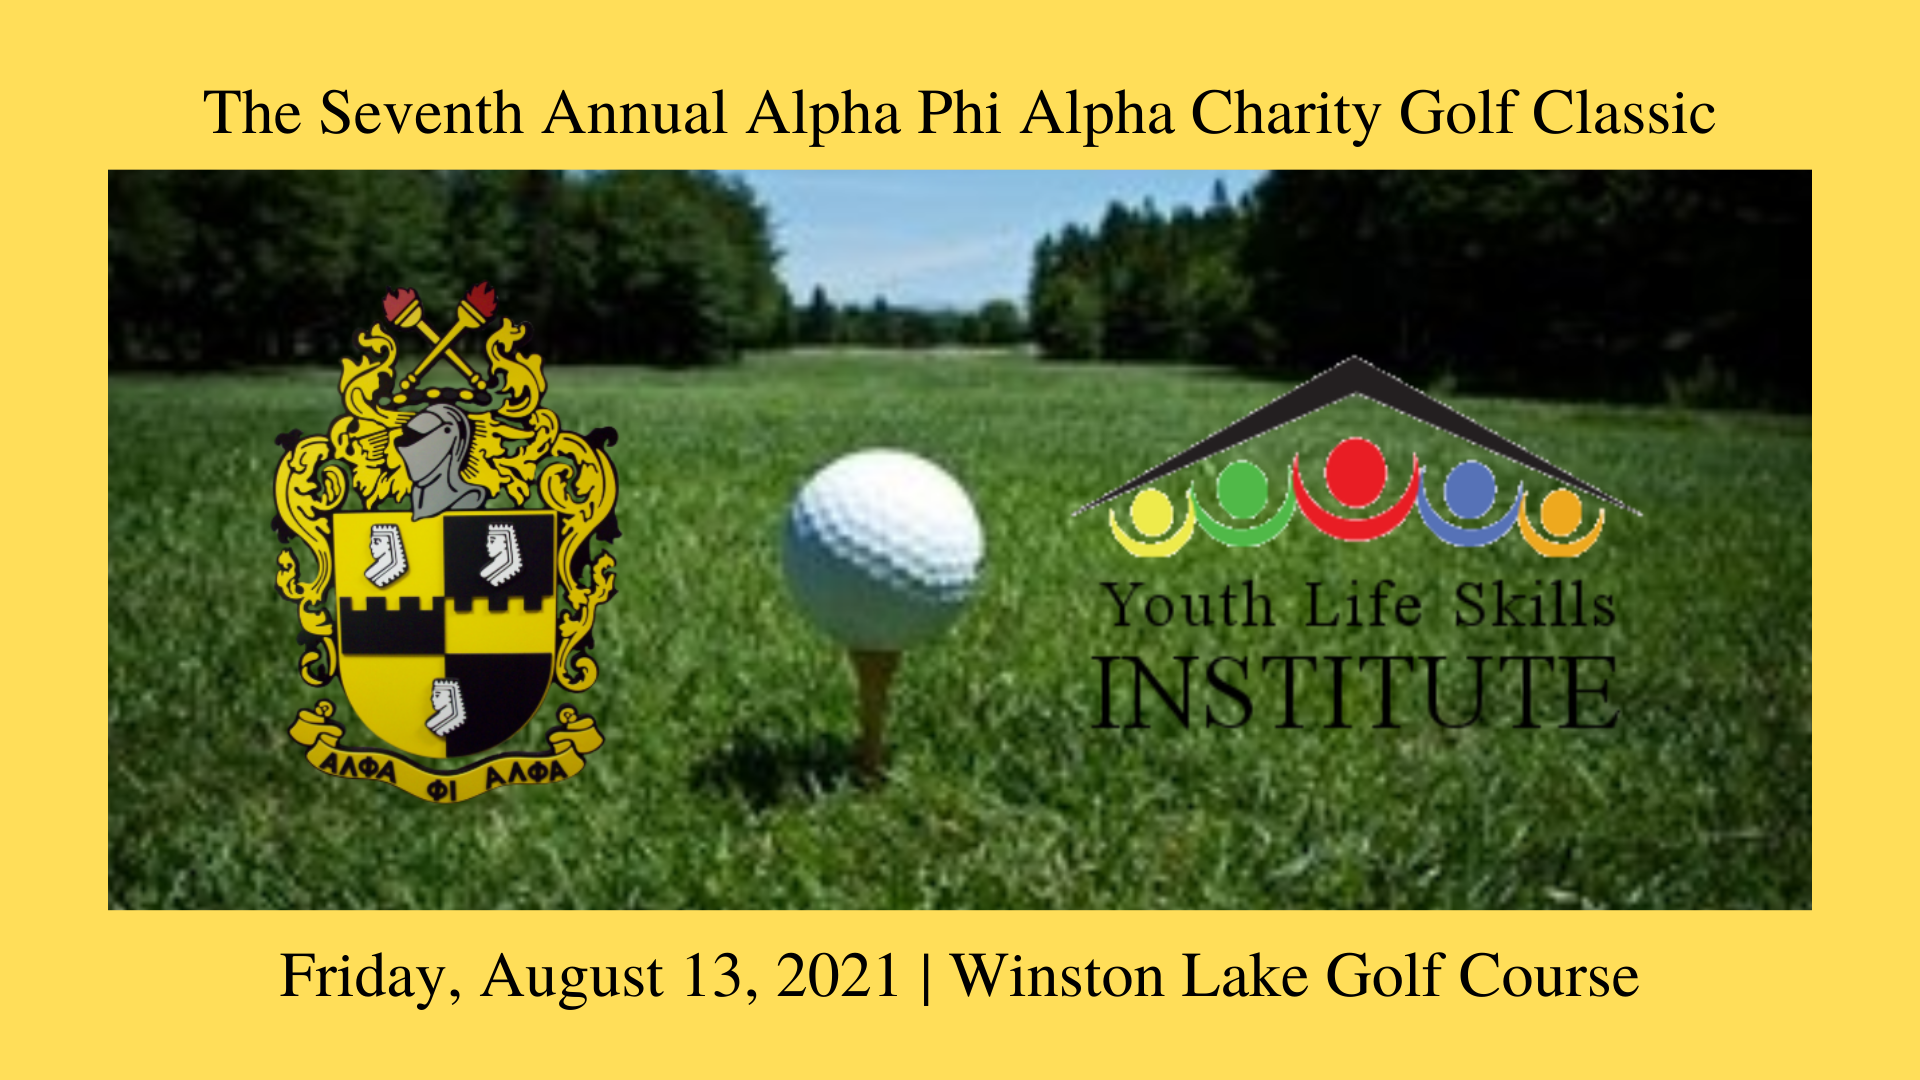 The Seventh Annual Alpha Phi Alpha Charity Golf Classic